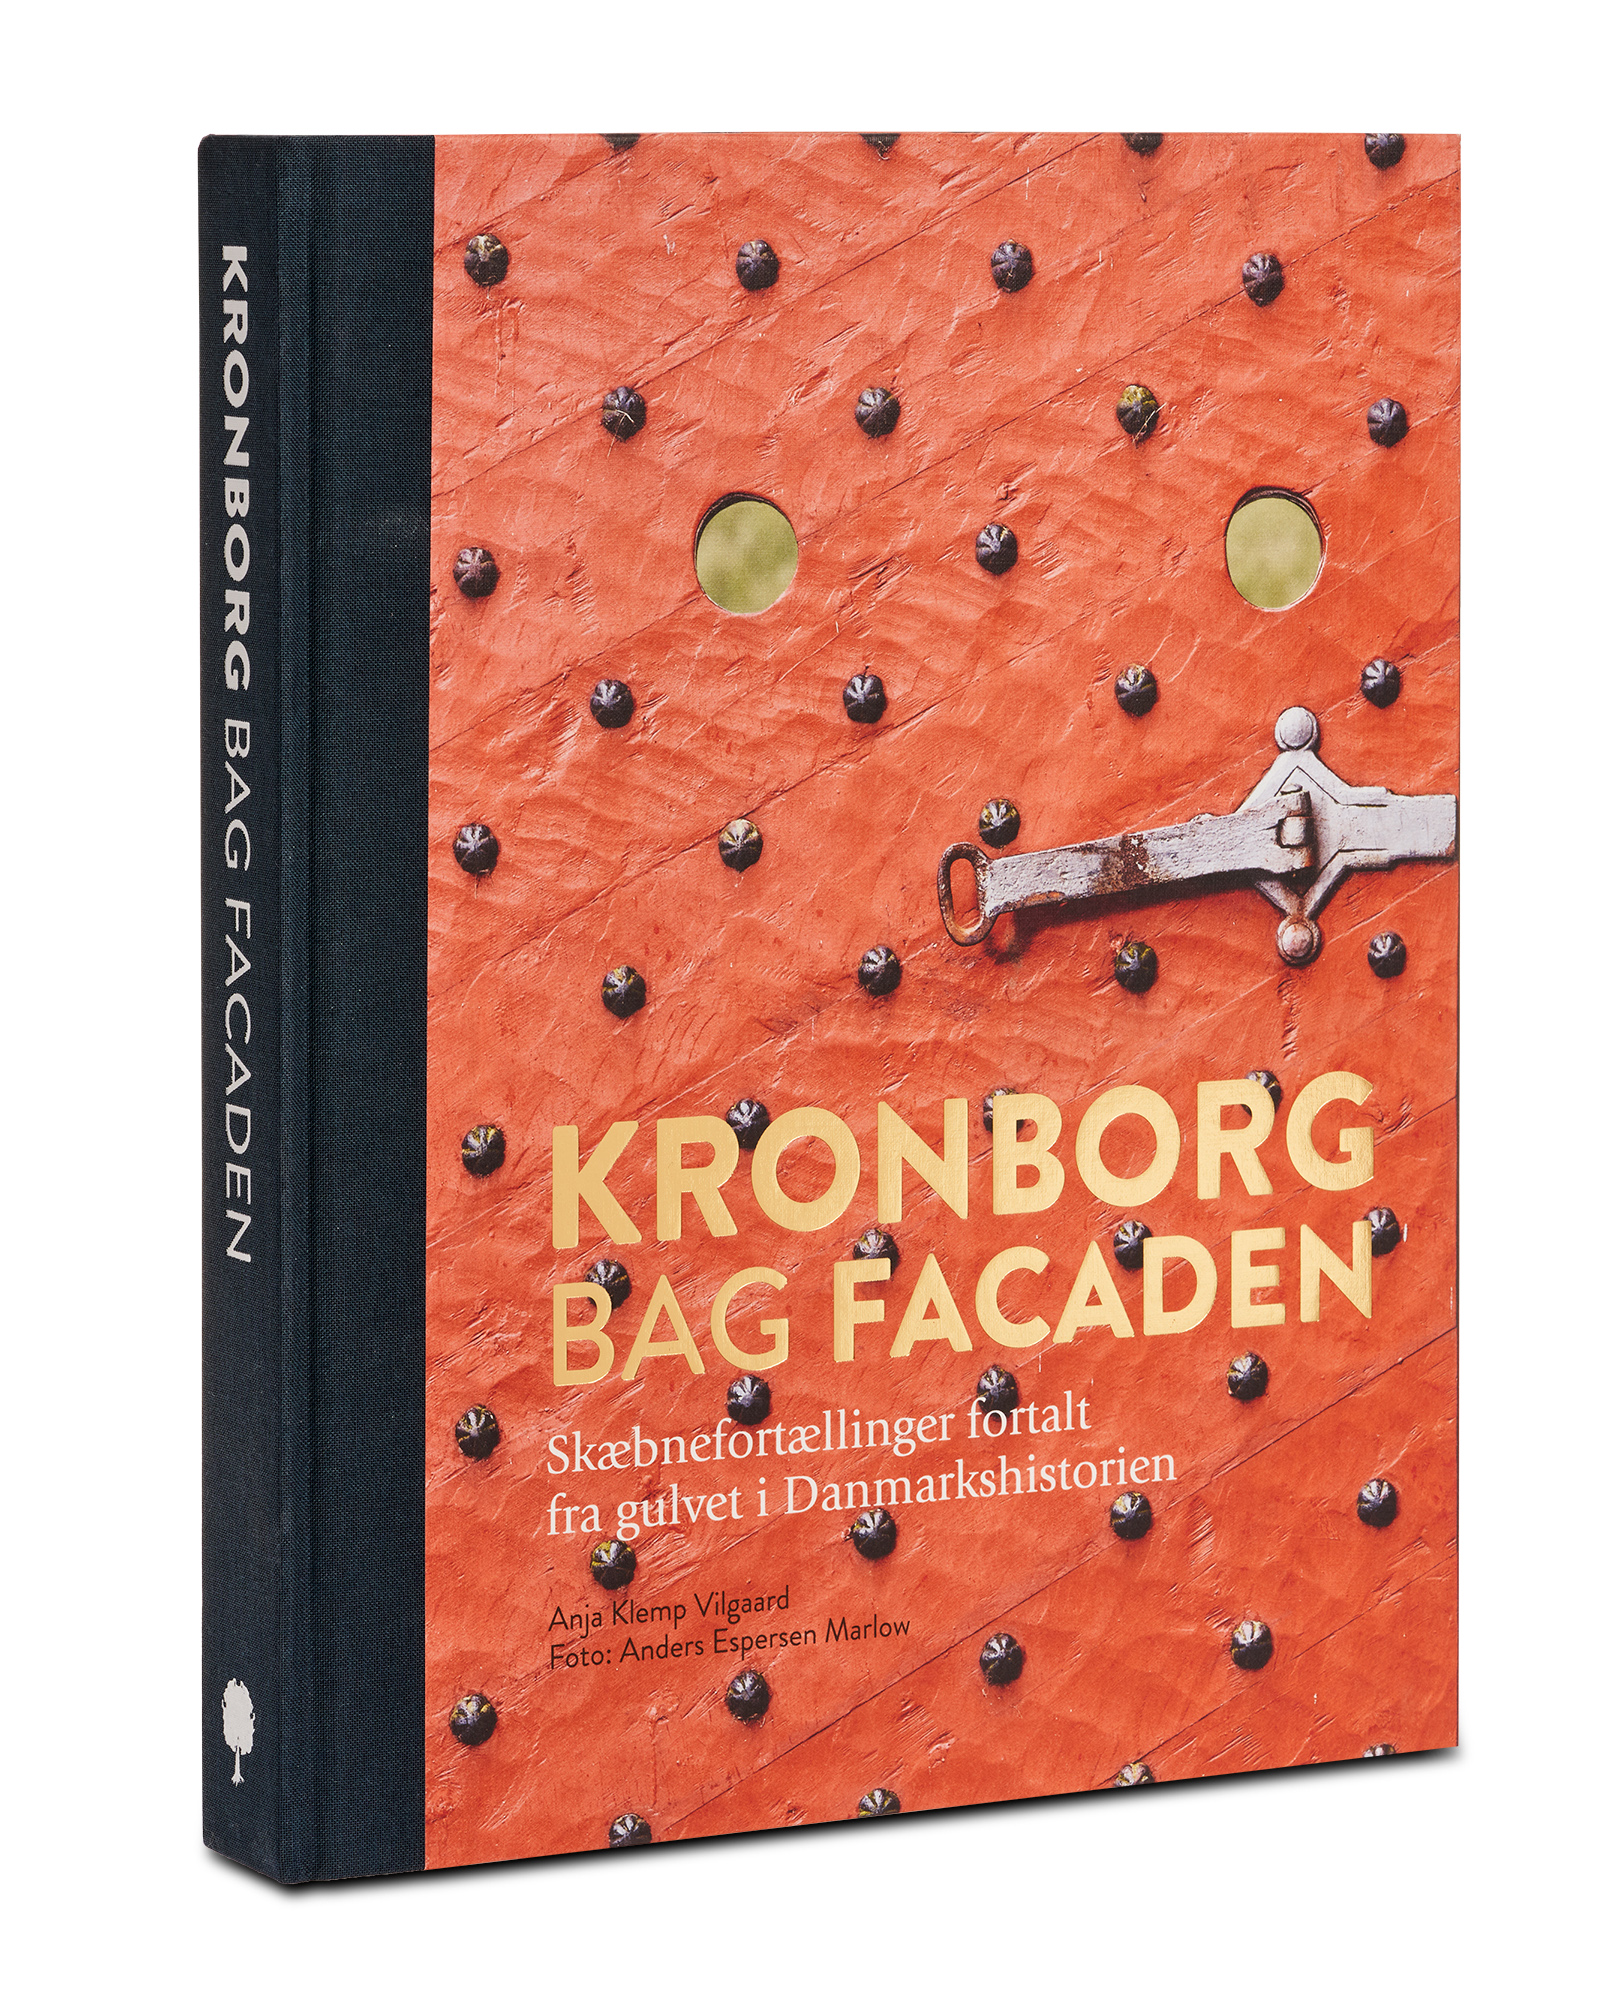 Kronborg bag facaden, en bog om en dansk verdensarv og dens mennesker. Storytelling